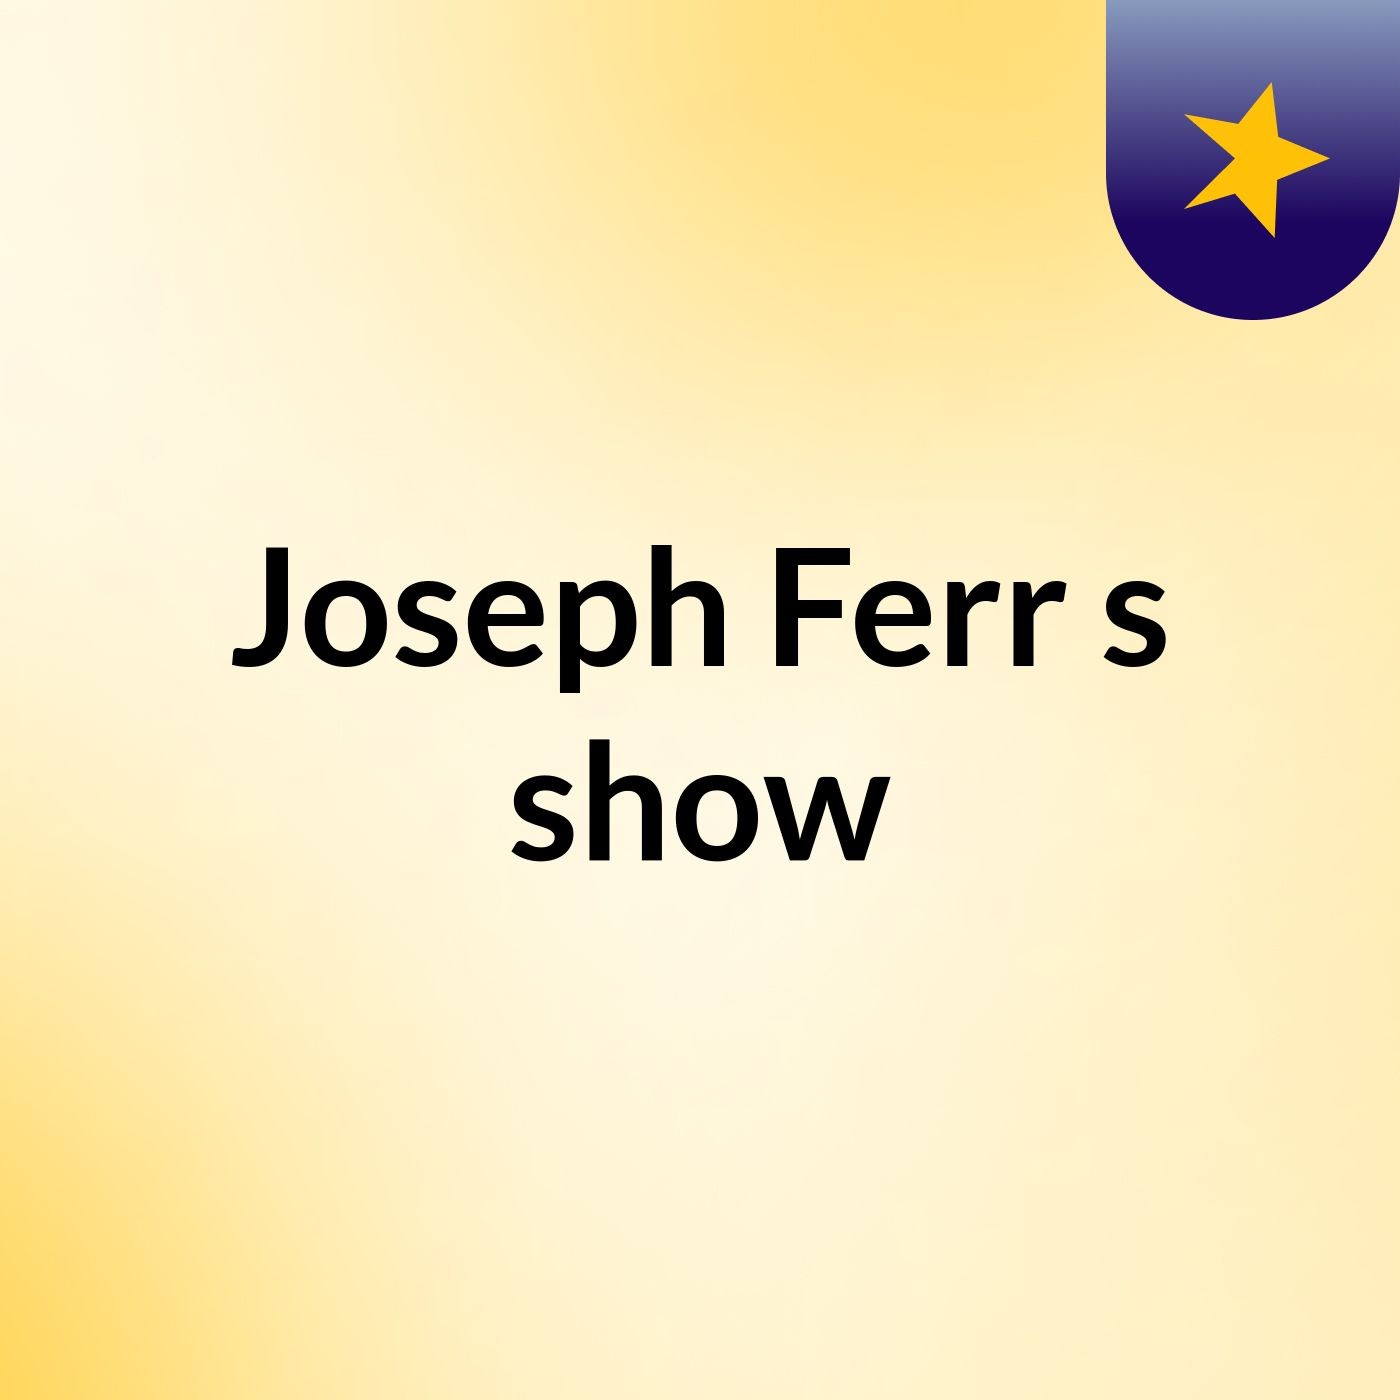 Joseph Ferr's show